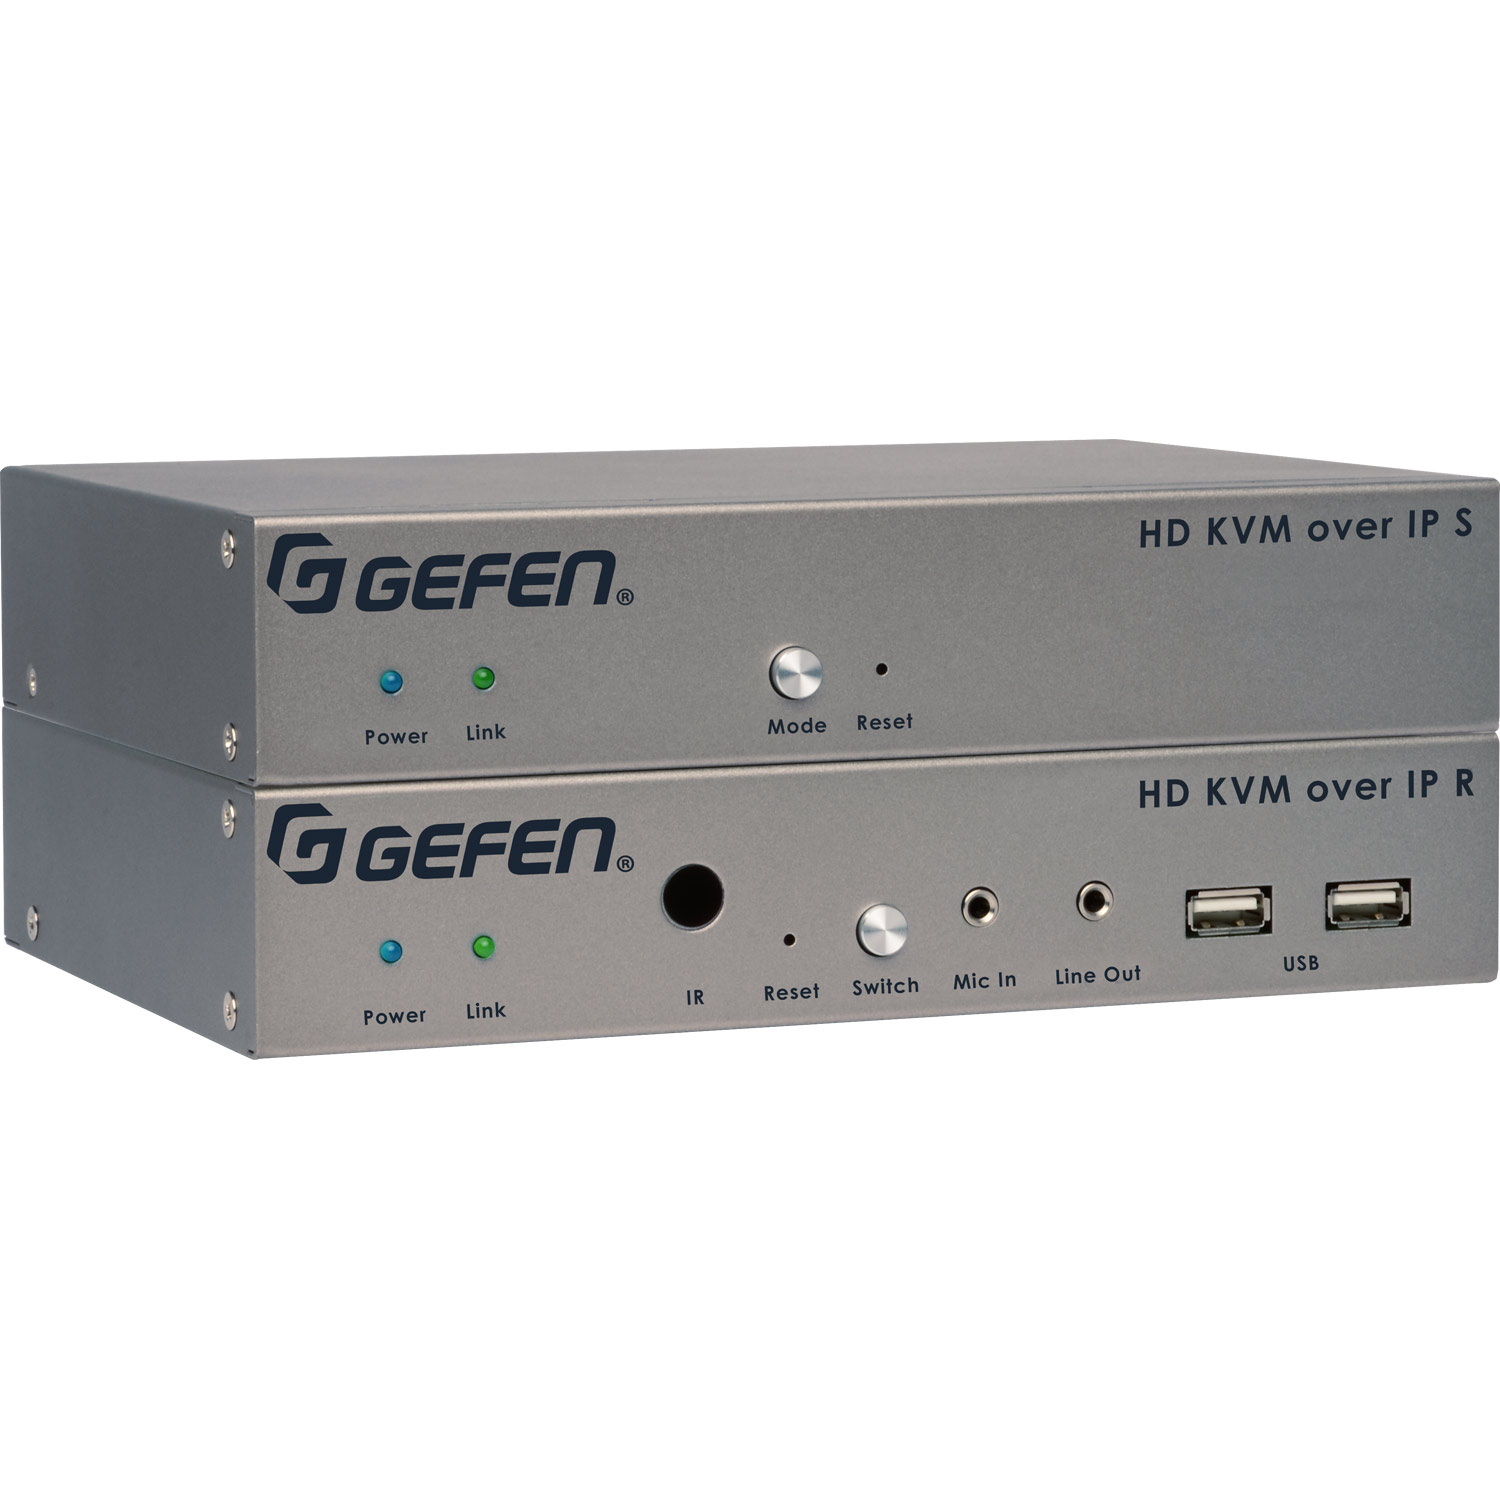 HD KVM over IP - Receiver Package | Gefen